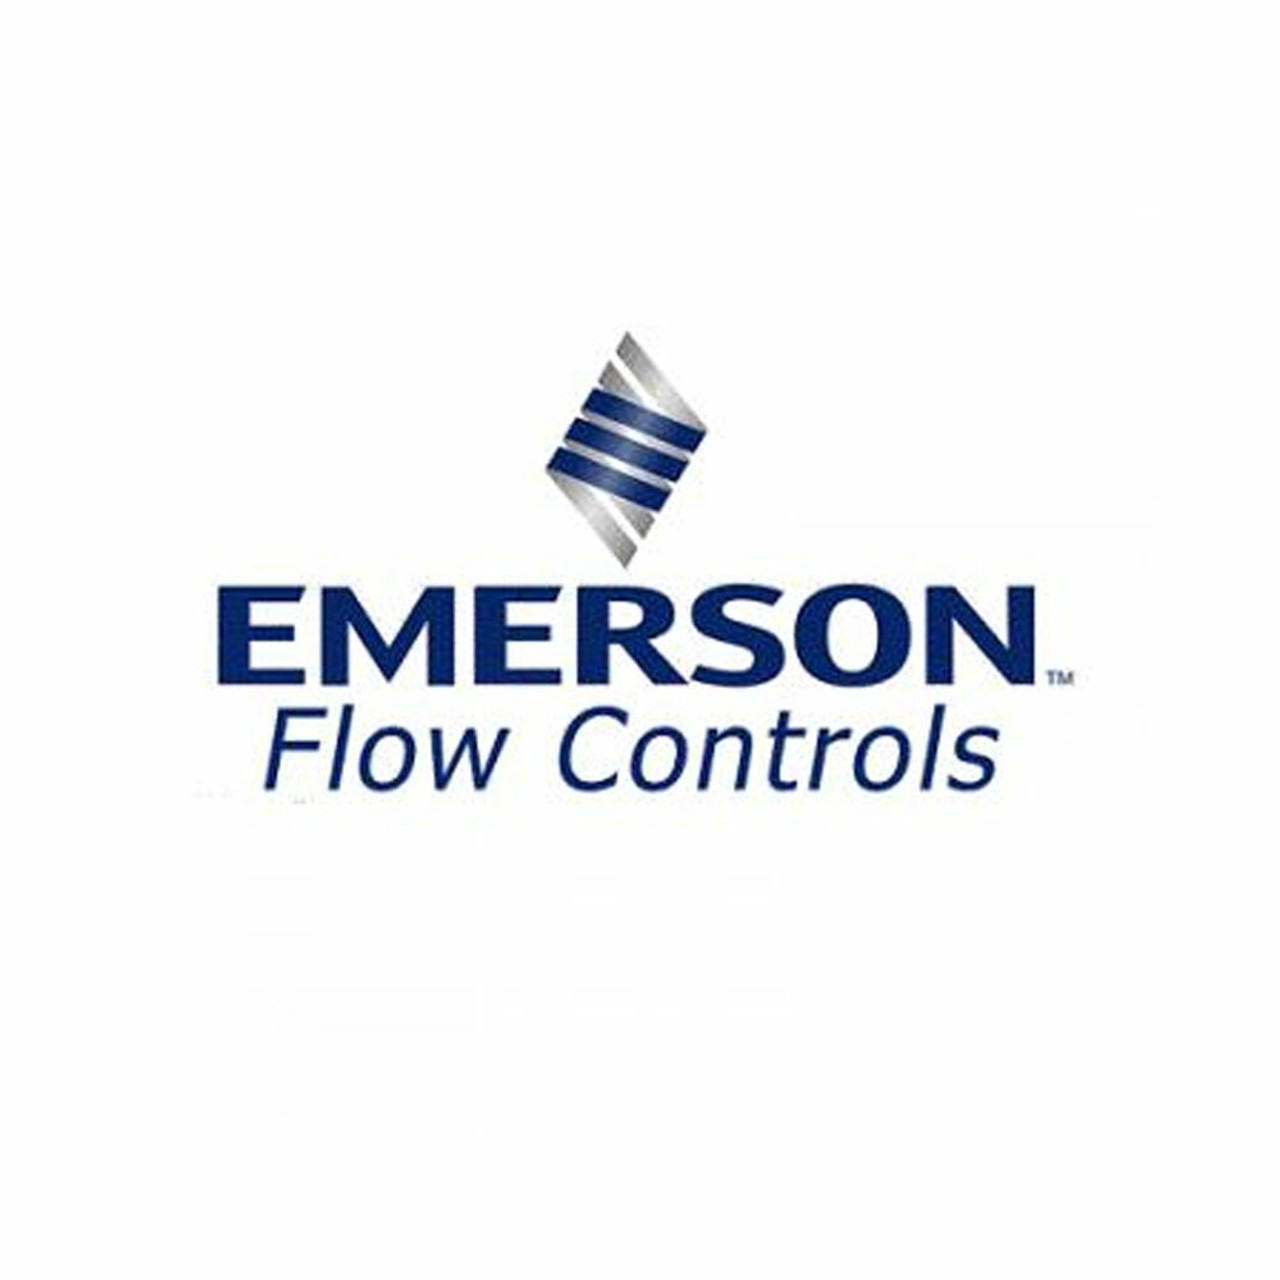 Emerson Flow Controls